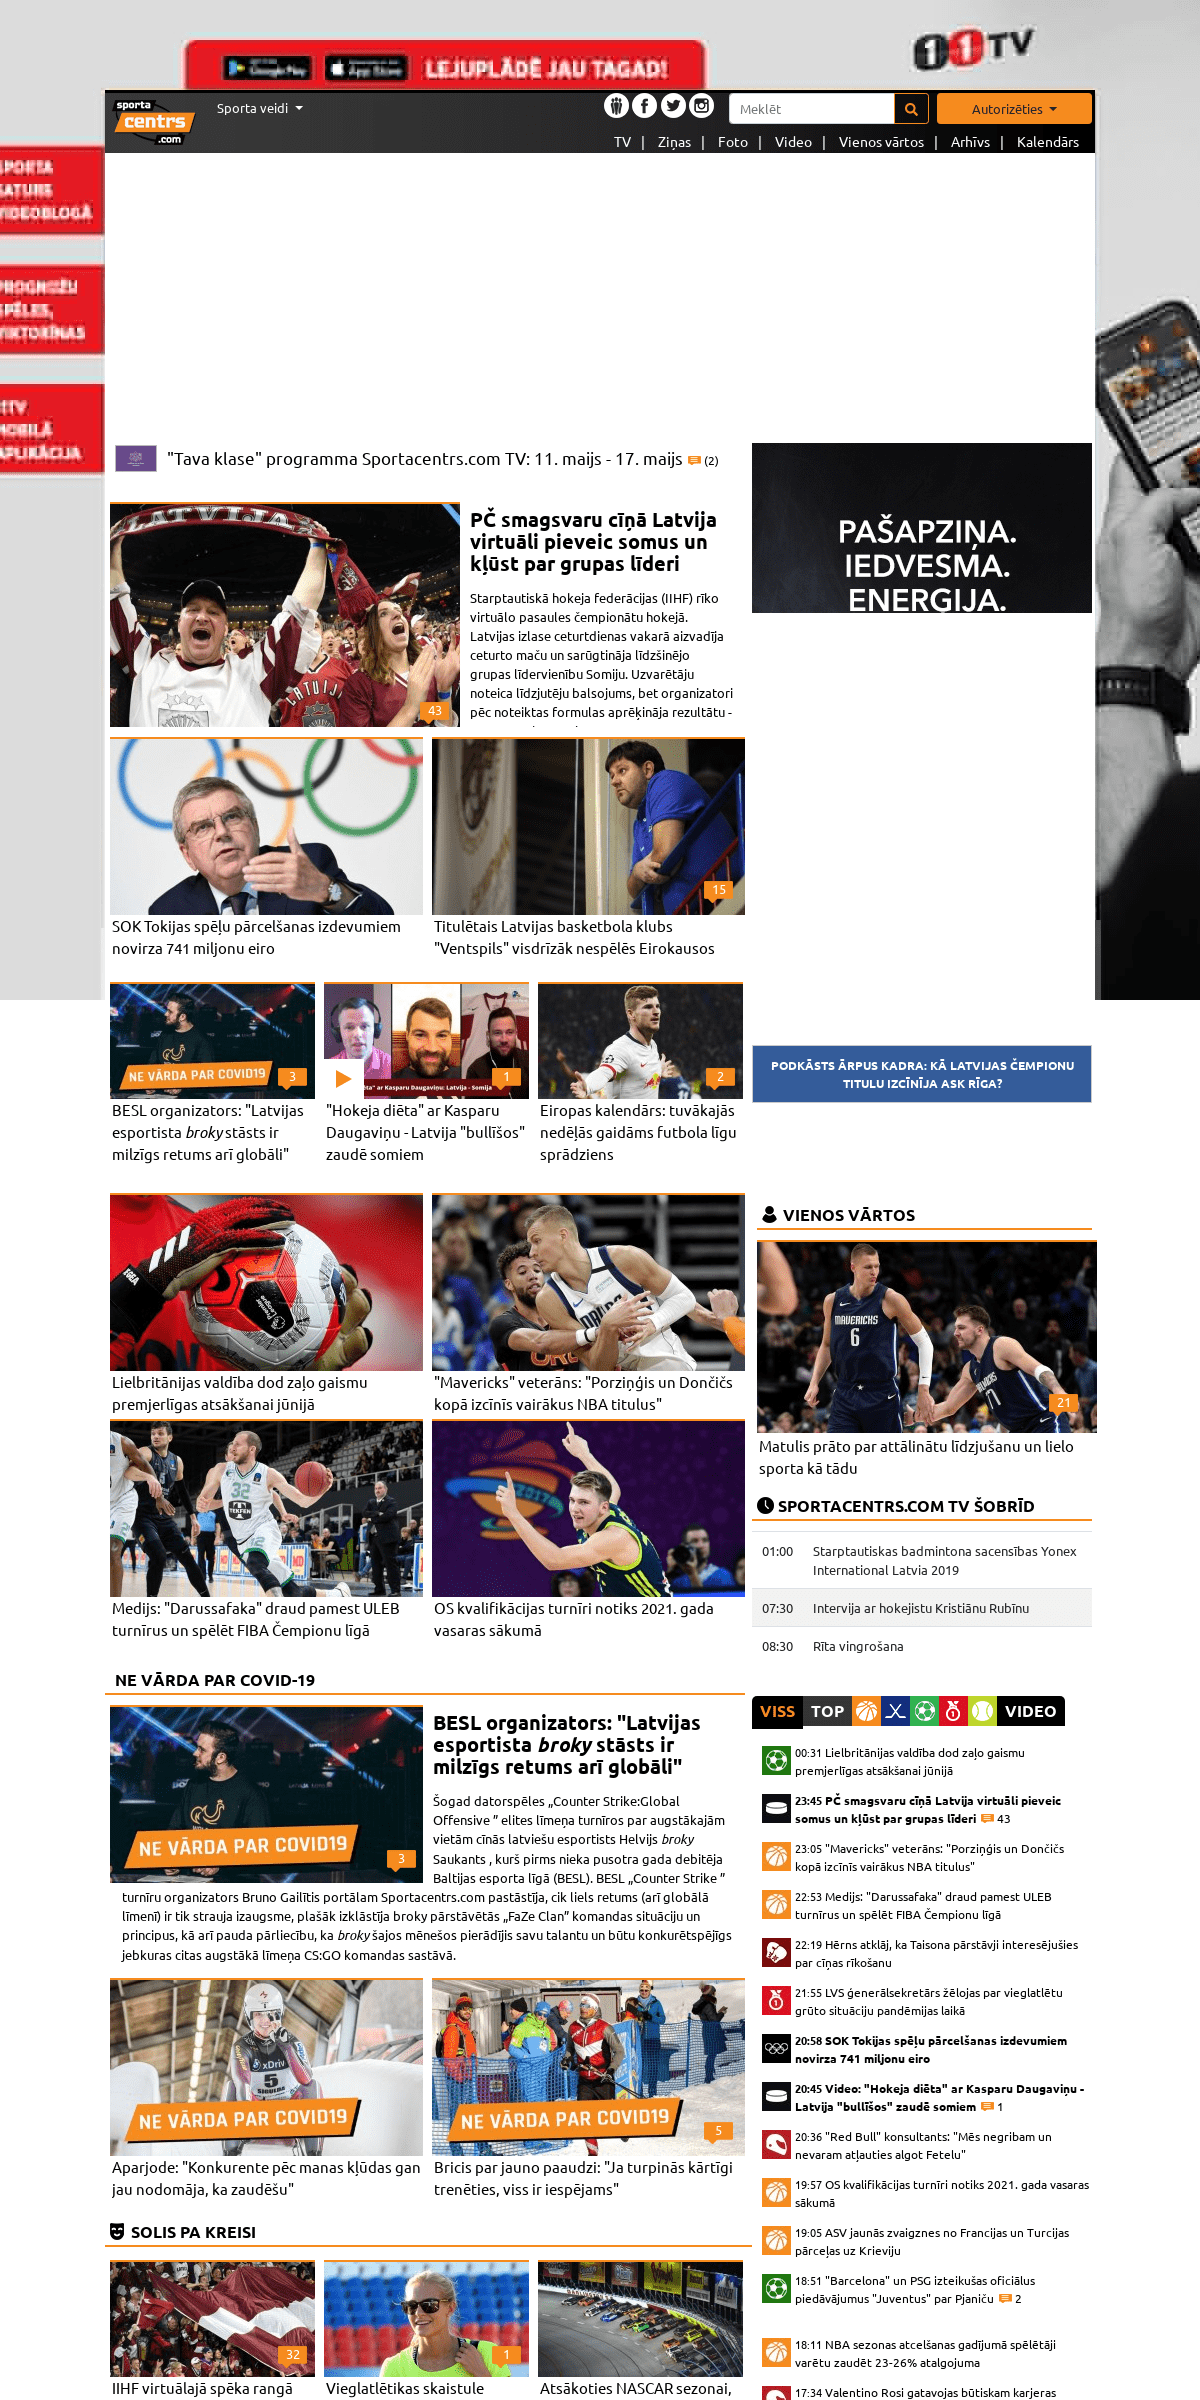 A complete backup of sportacentrs.com